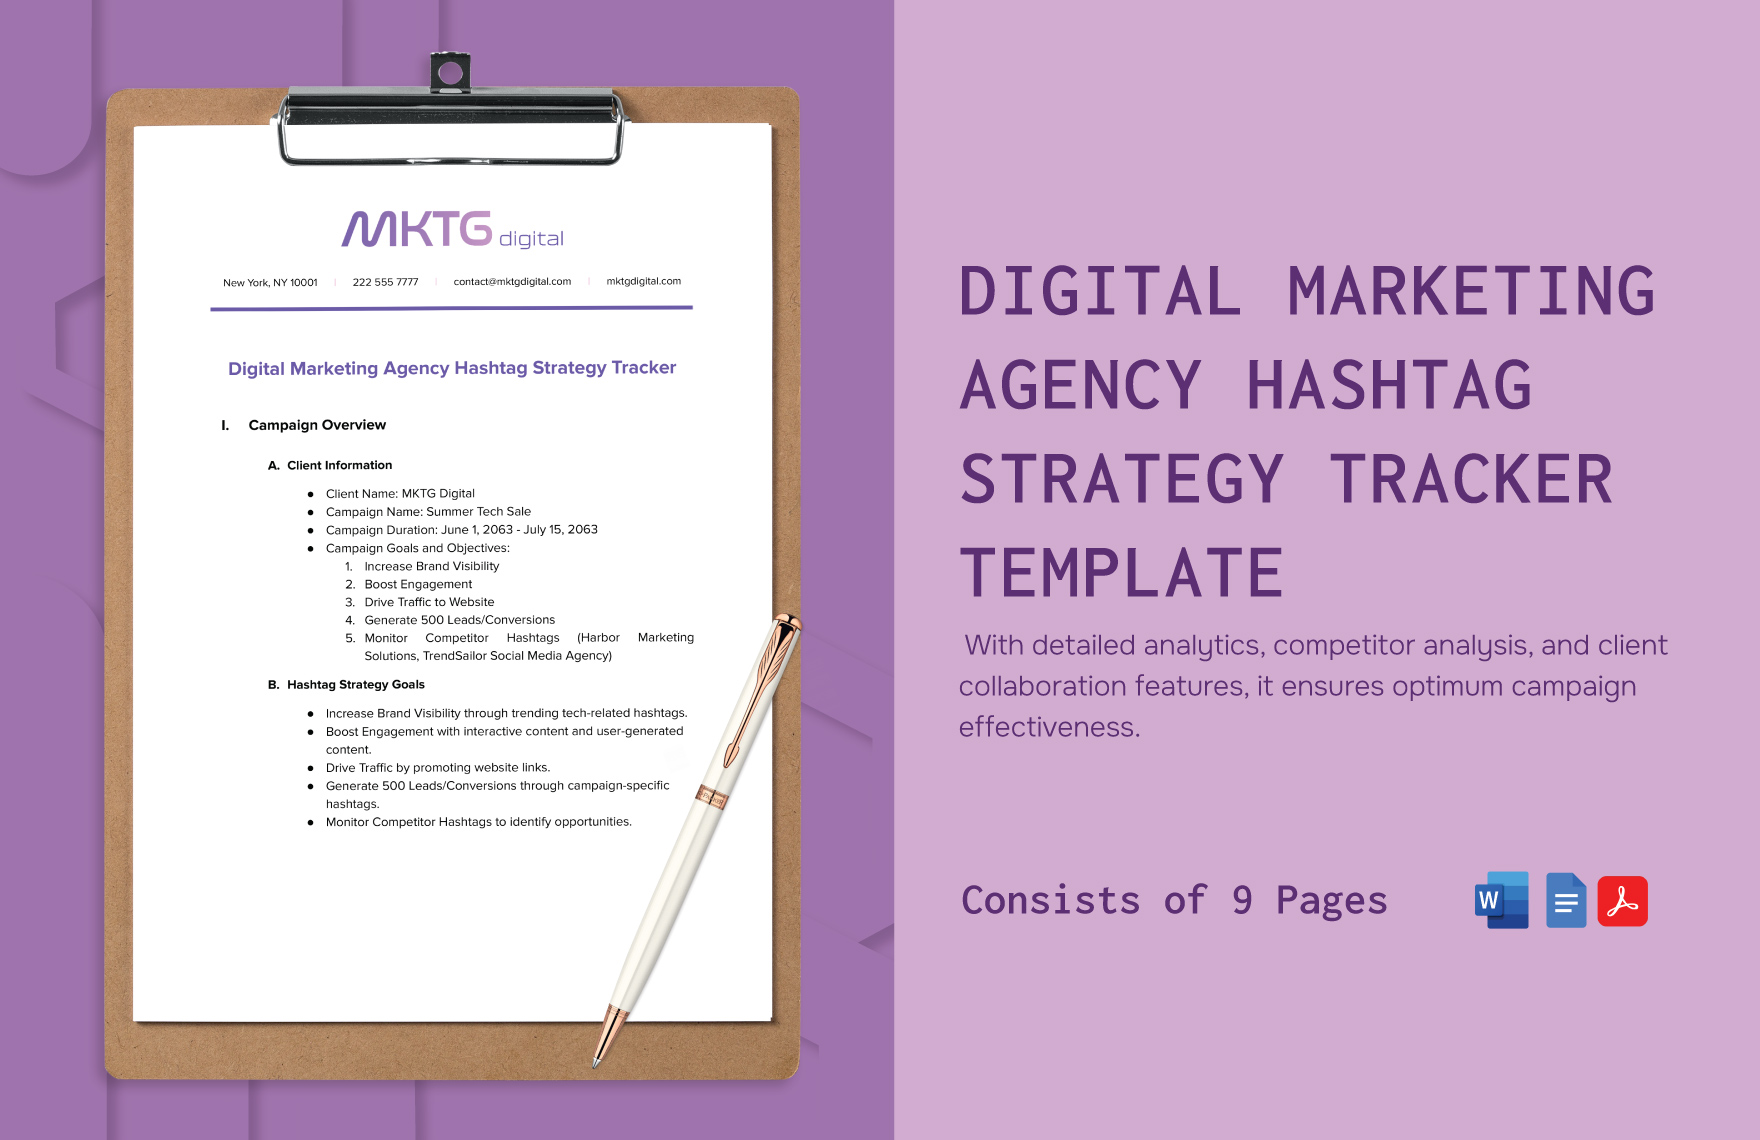 Digital Marketing Agency Hashtag Strategy Tracker Template